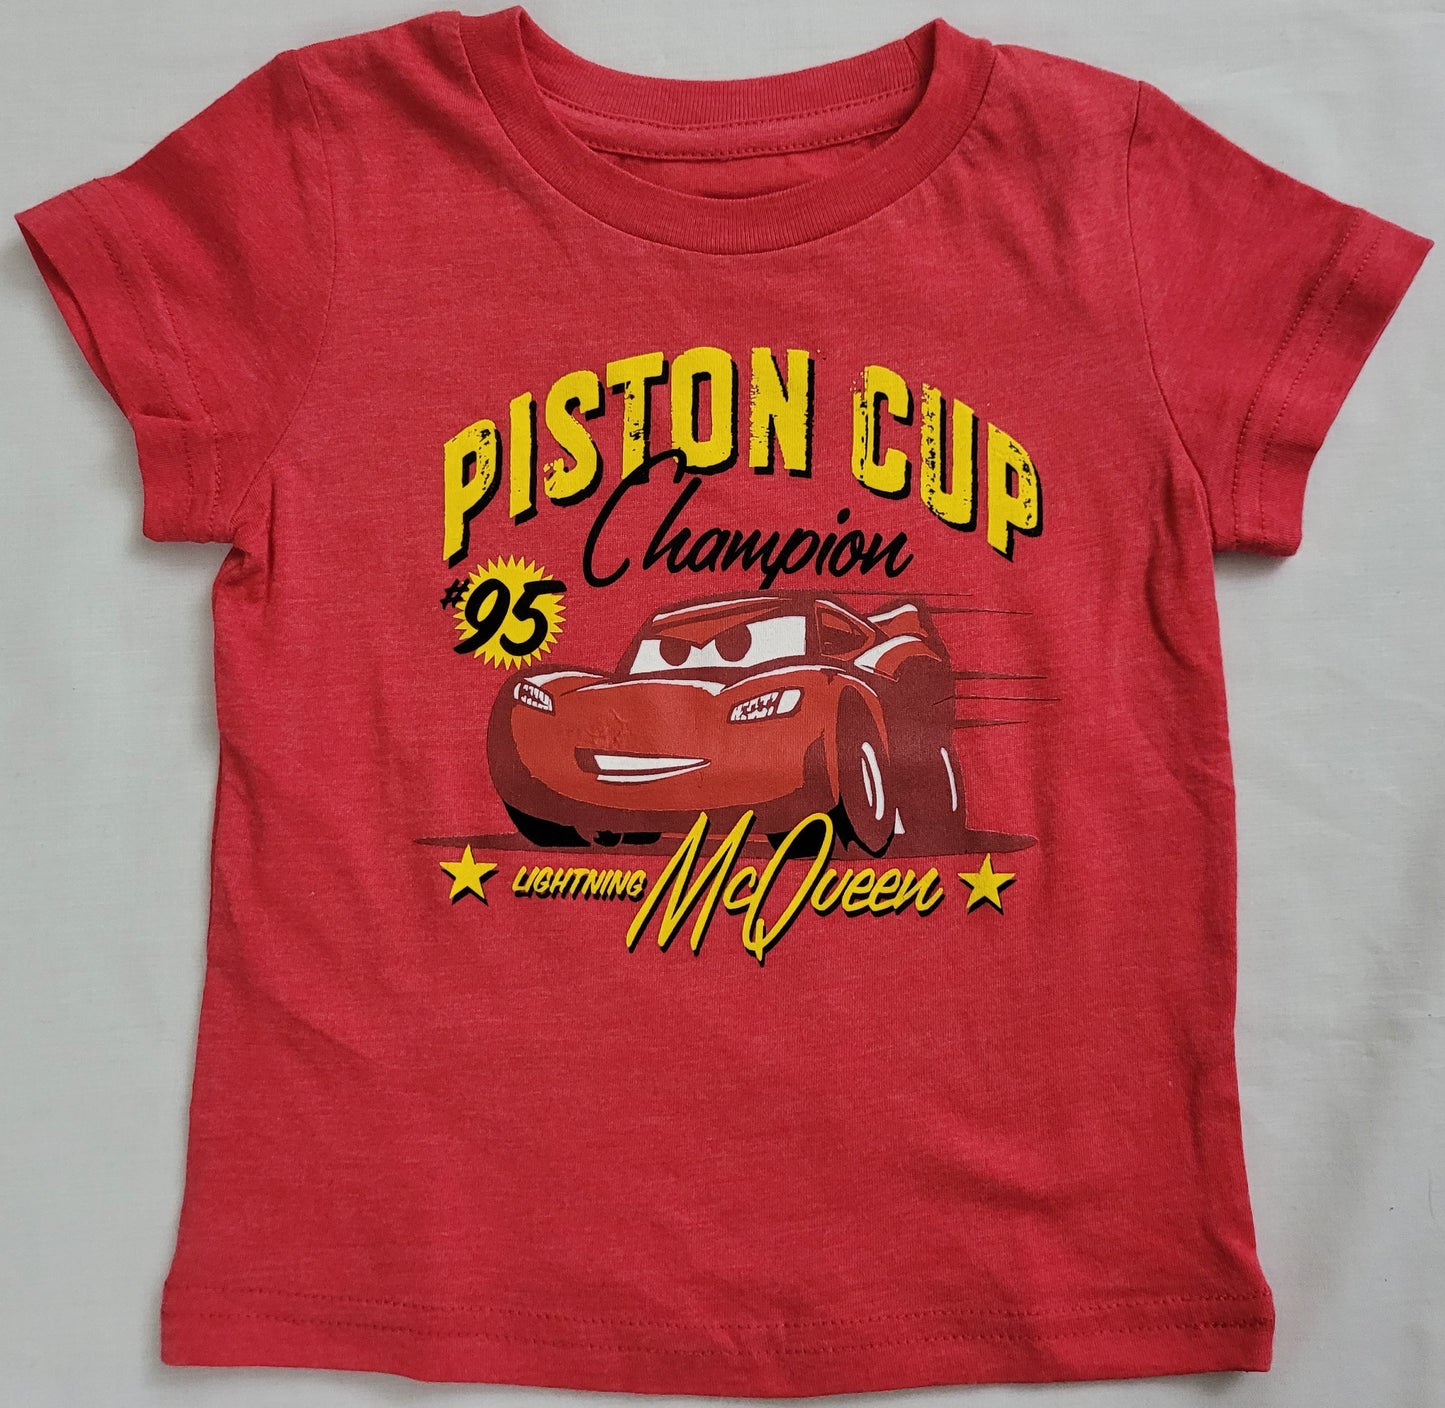 Lightening McQueen Piston Cup Chamption 1995 Boys T-Shirt (Red)